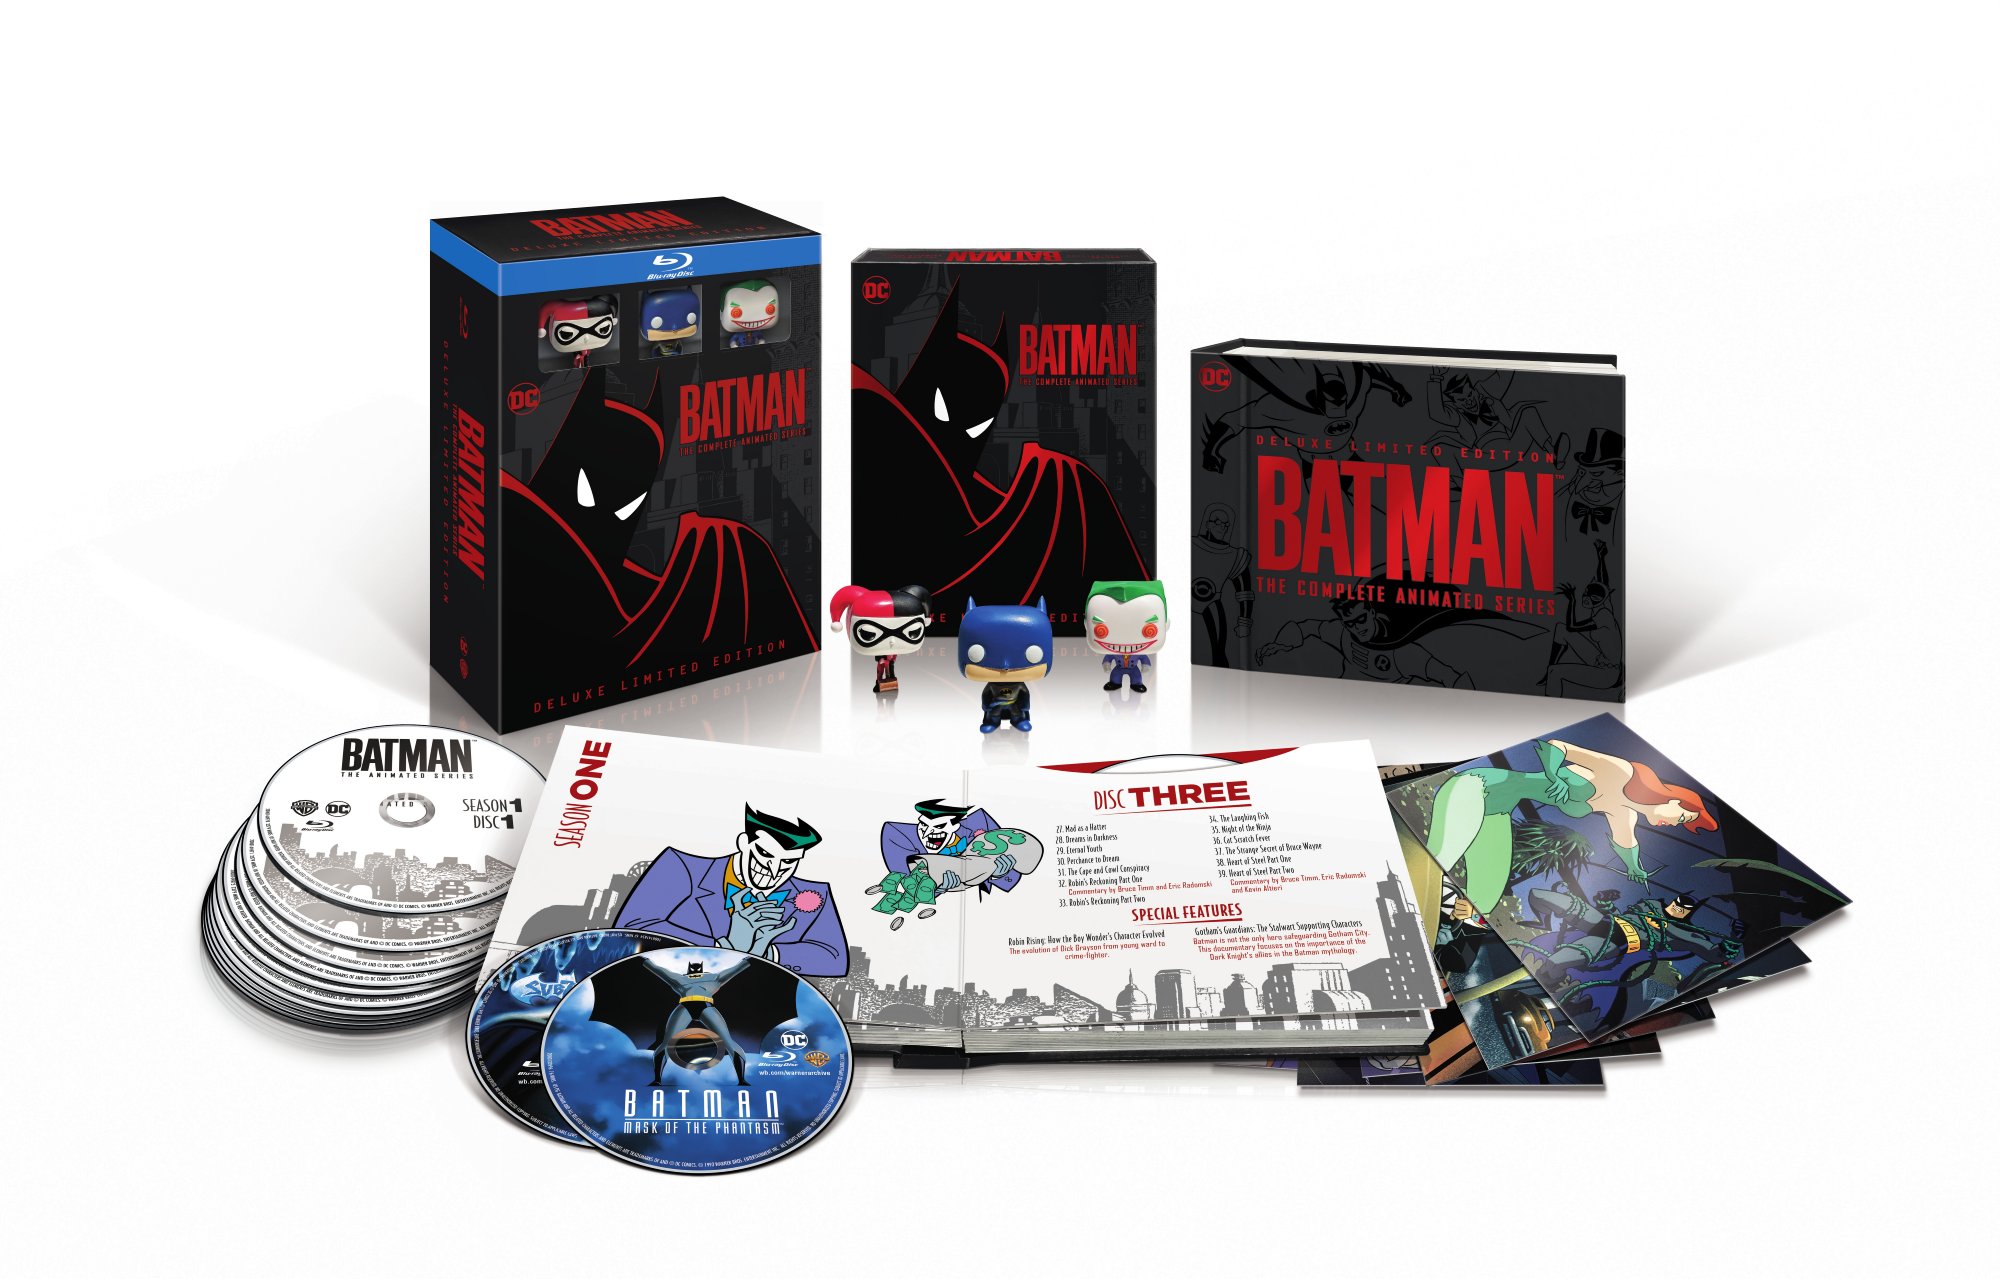 Batman The Animated Series Limited Edition Box set